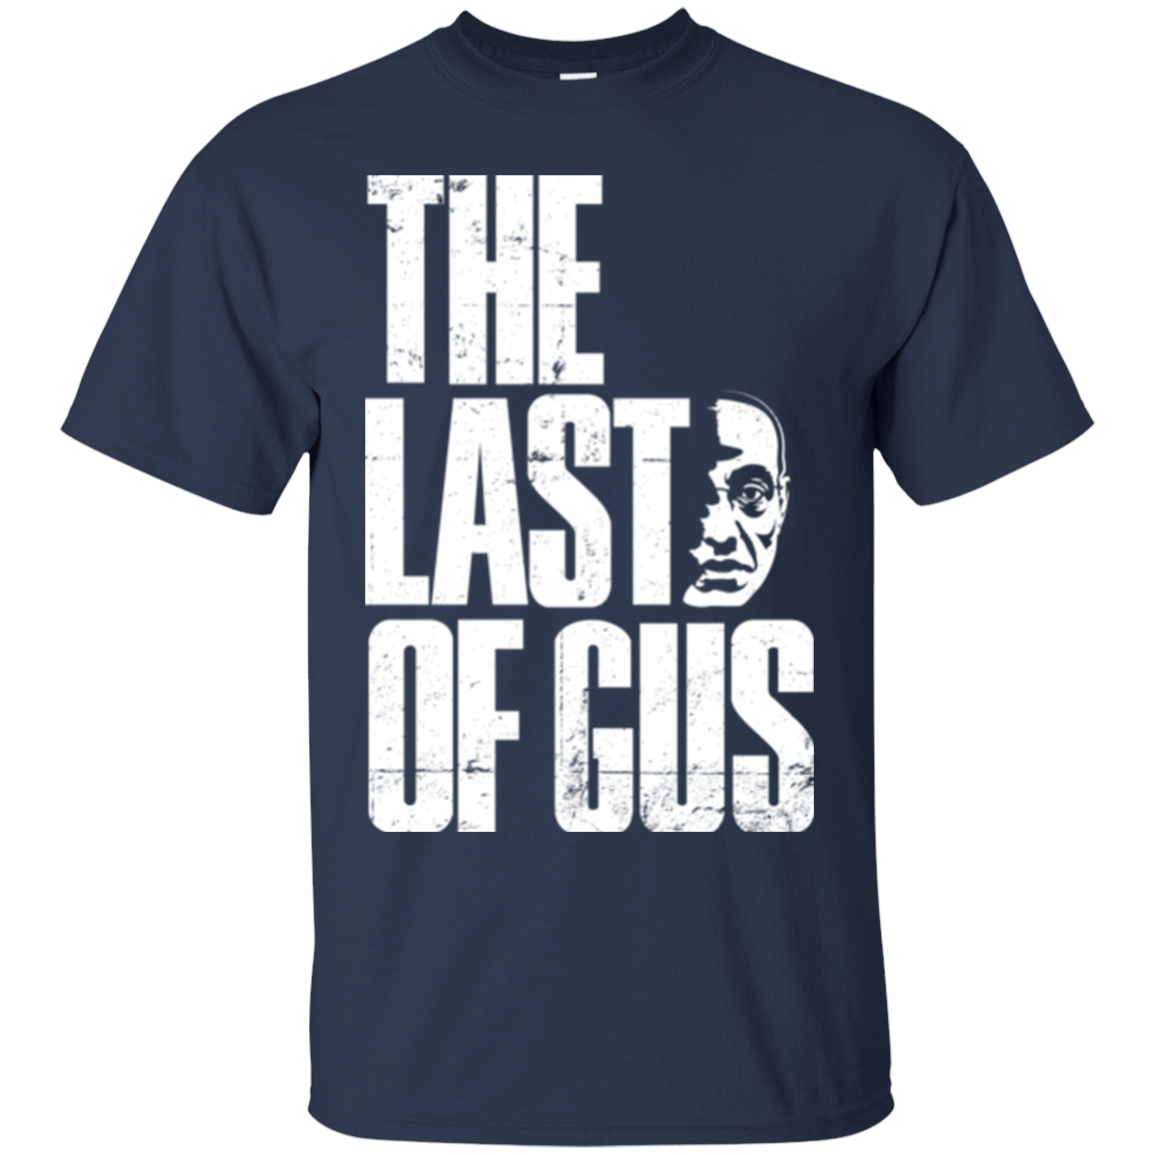 T-Shirts Navy / Small Last of Gus T-Shirt